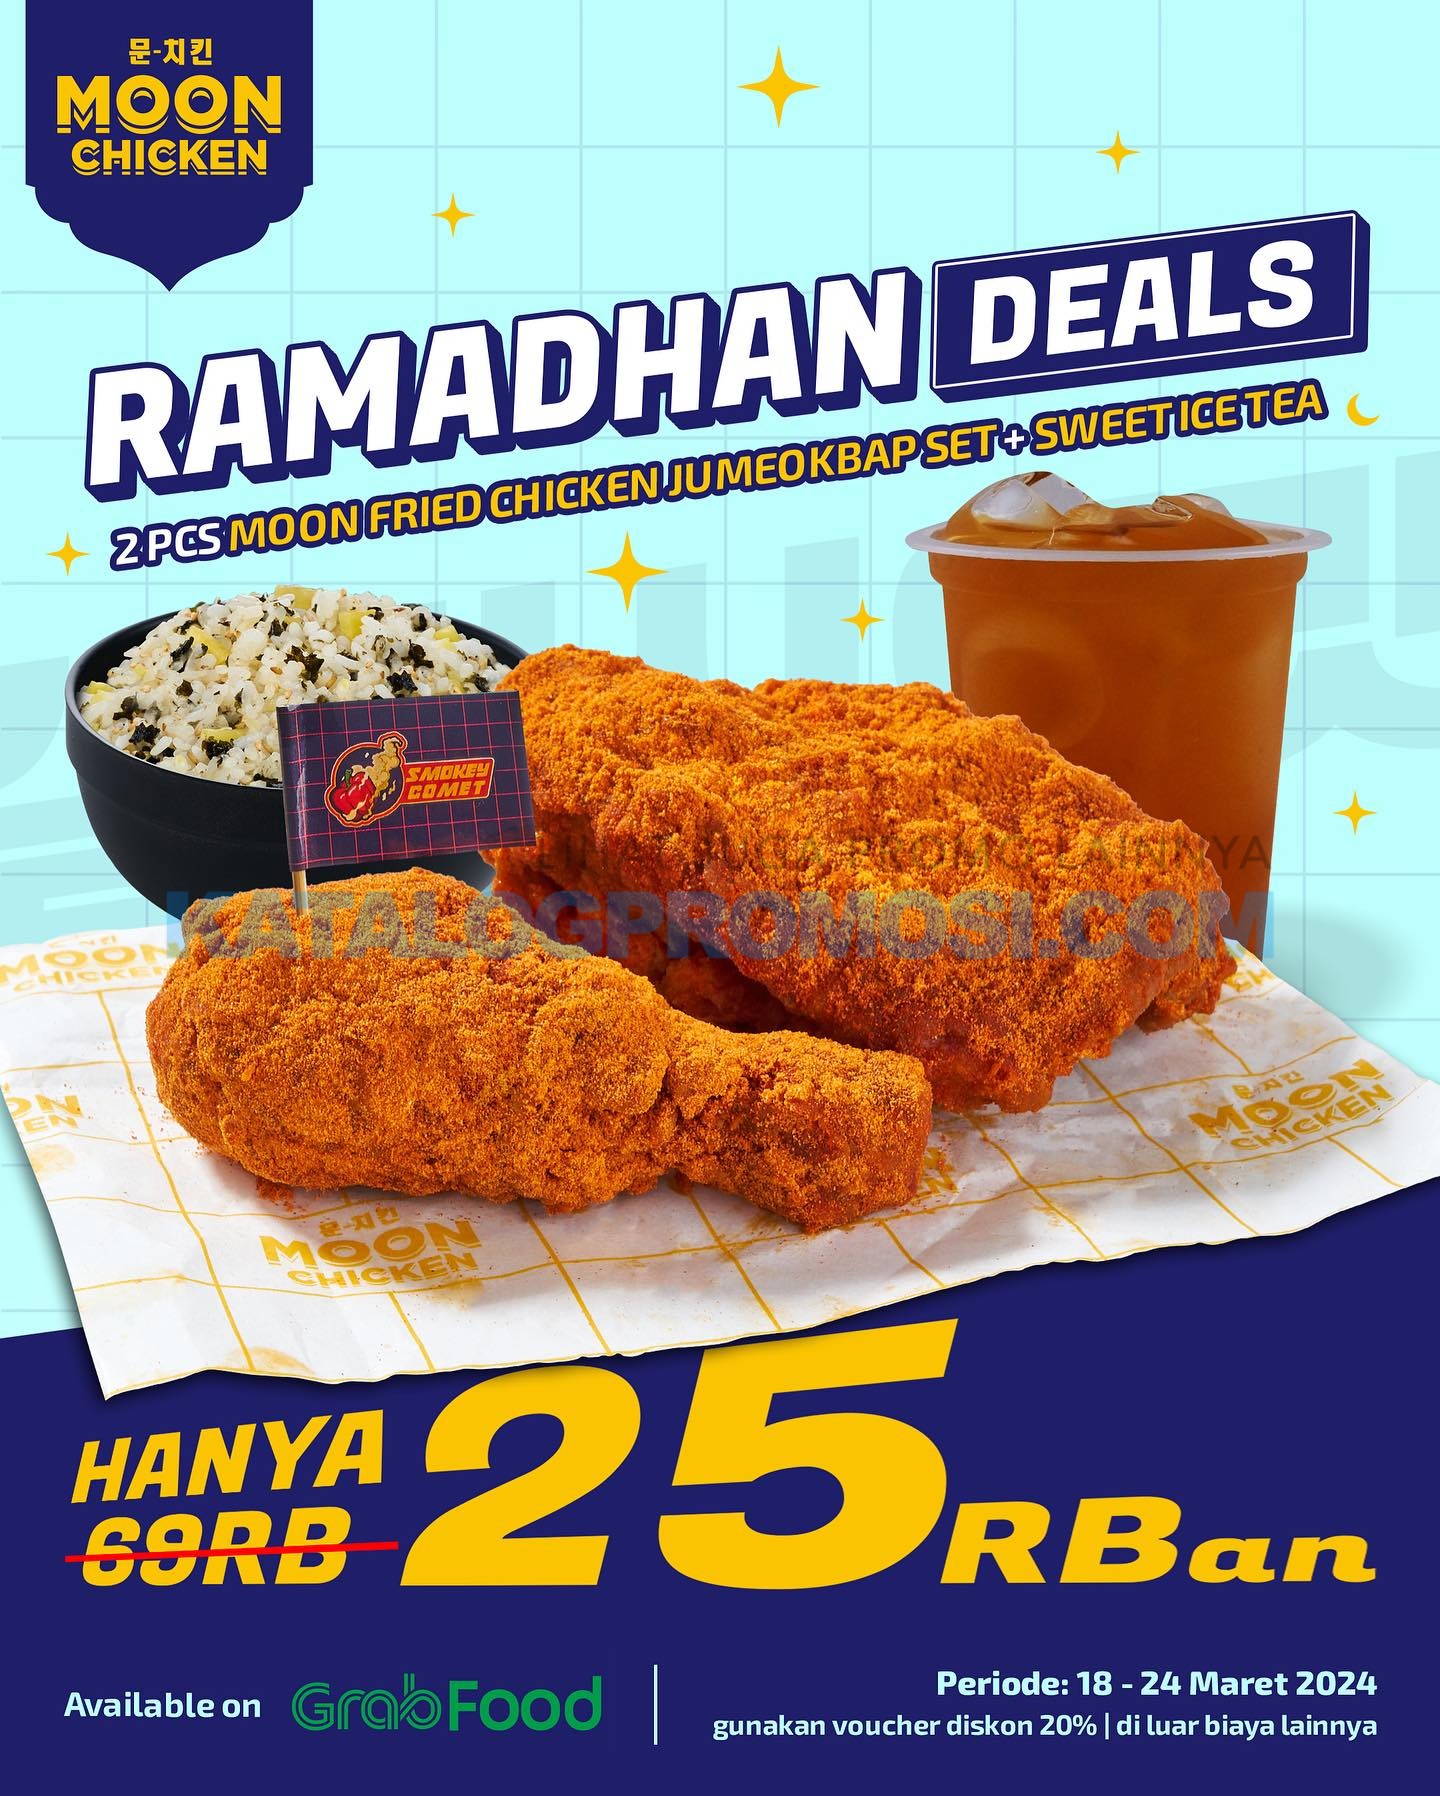 Promo MOON CHICKEN GRABFOOD Ramadan Deal - Paket 2 Pcs Moon Fried Chicken Jumeokbap Set + Sweet Ice Tea HANYA 25 RIBUAN